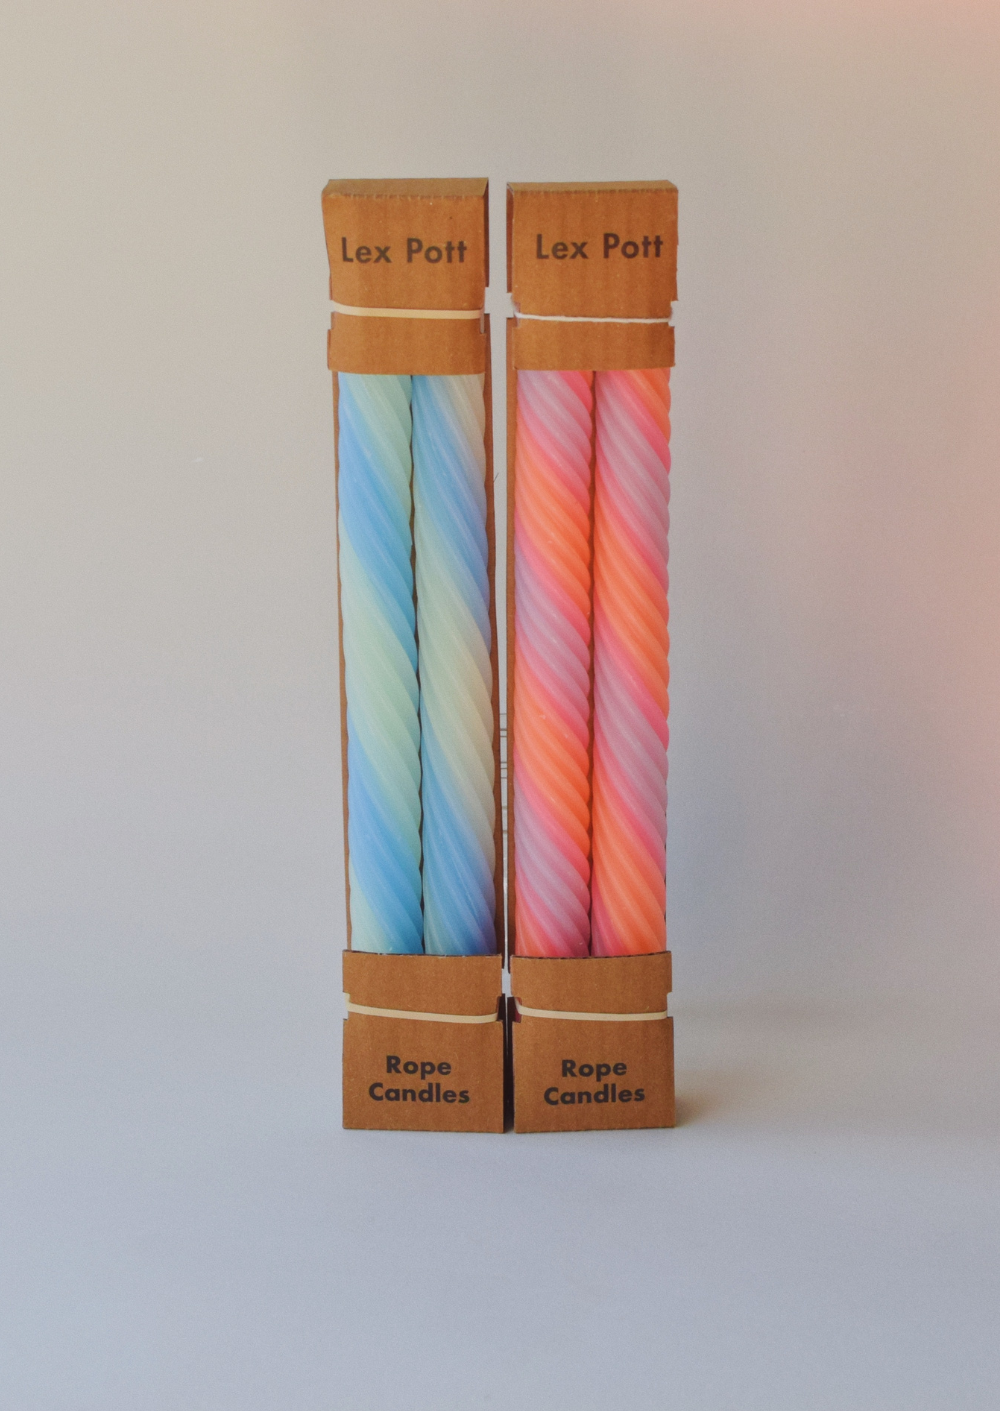 Lex Pott Rope Candles